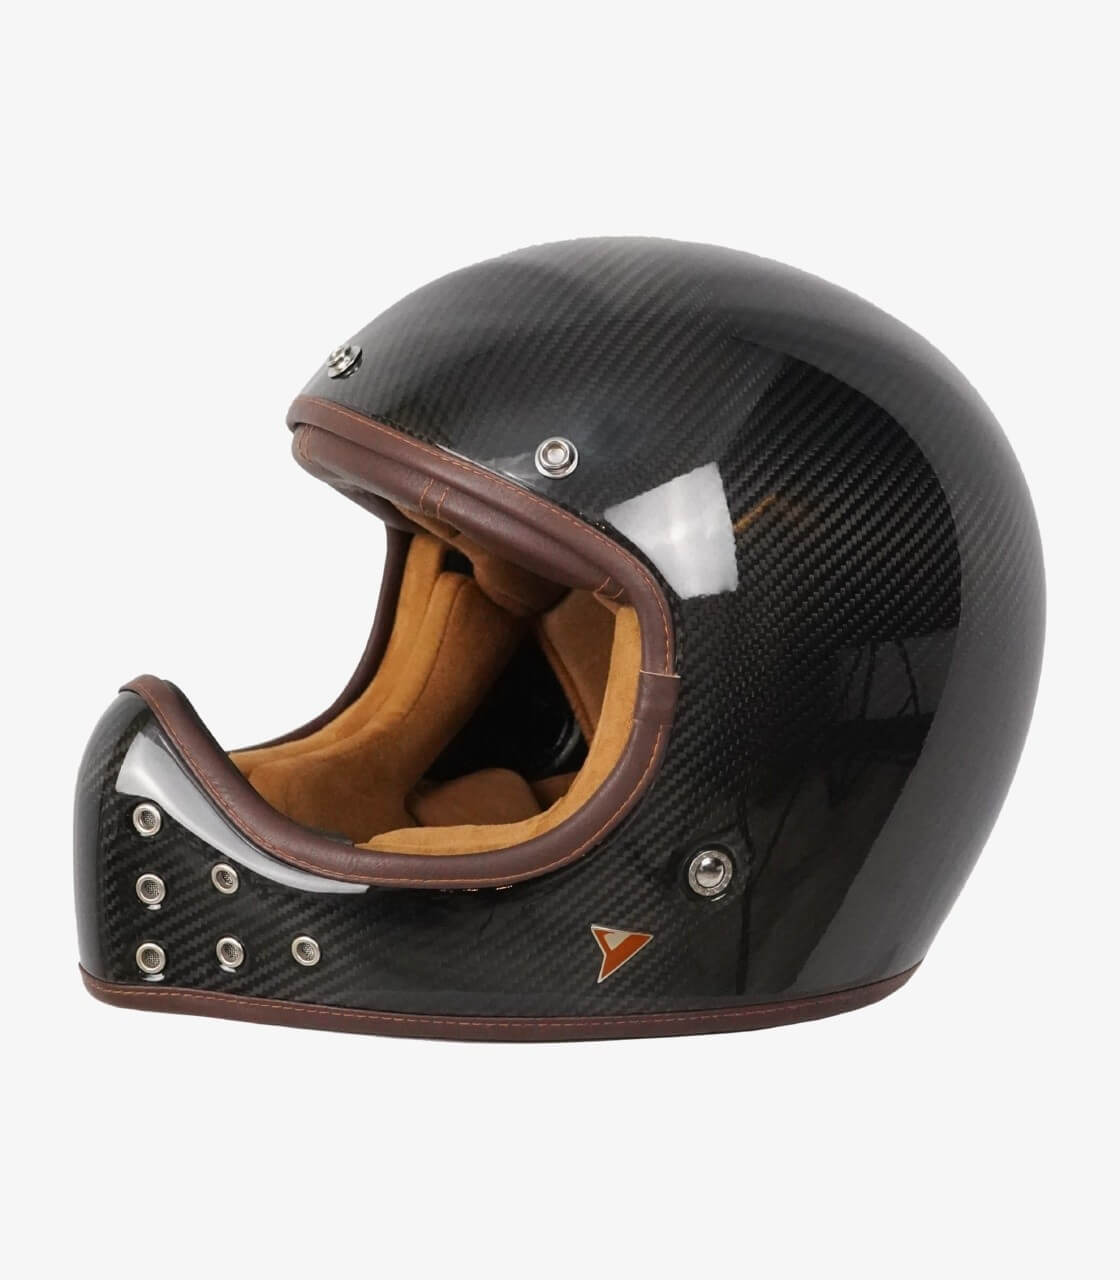 By City full-face carbon fiber helmet